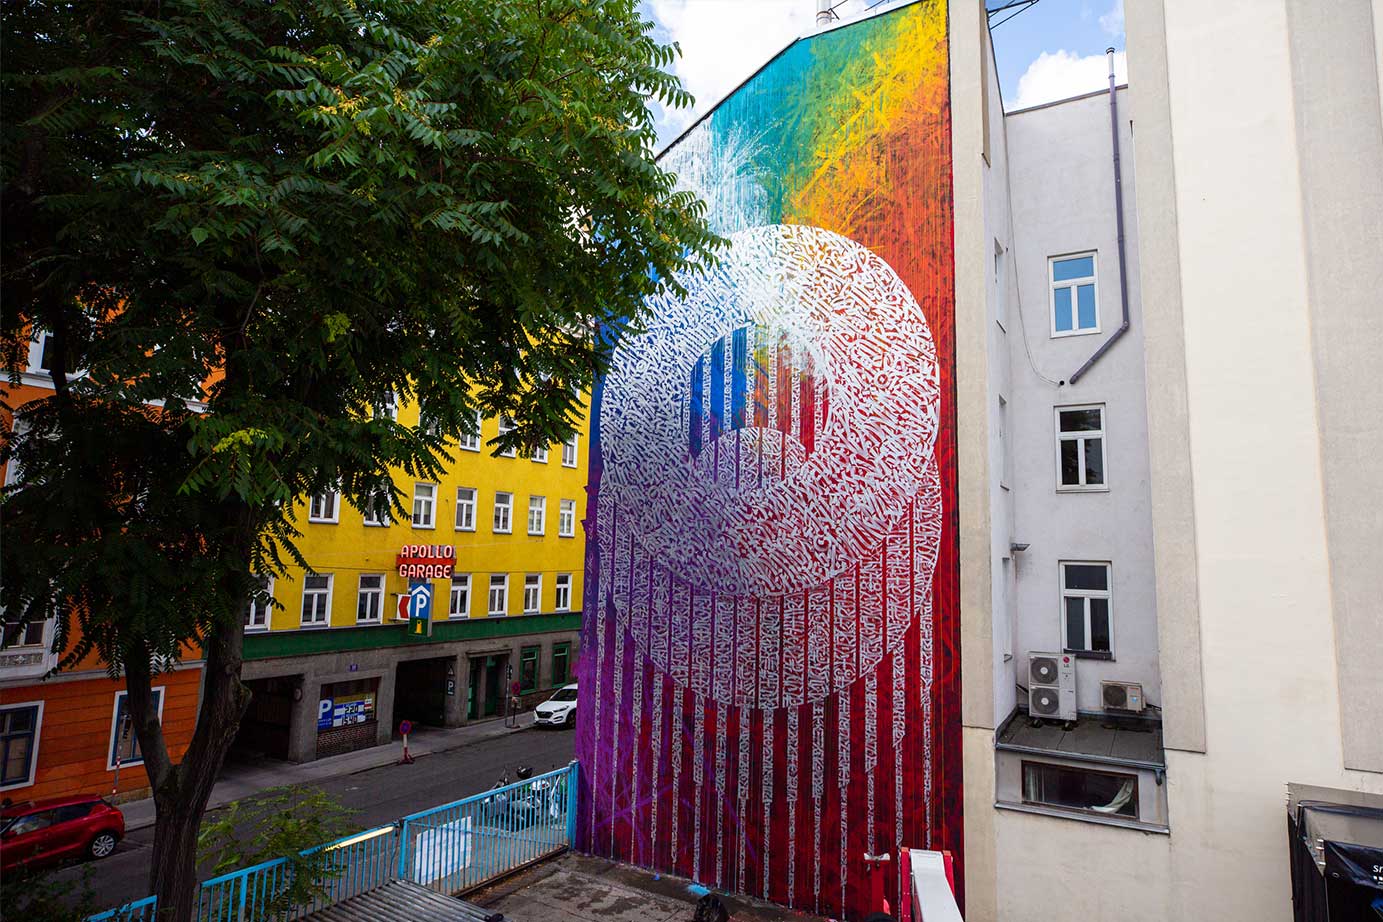 Said Dokins mural in Vienna